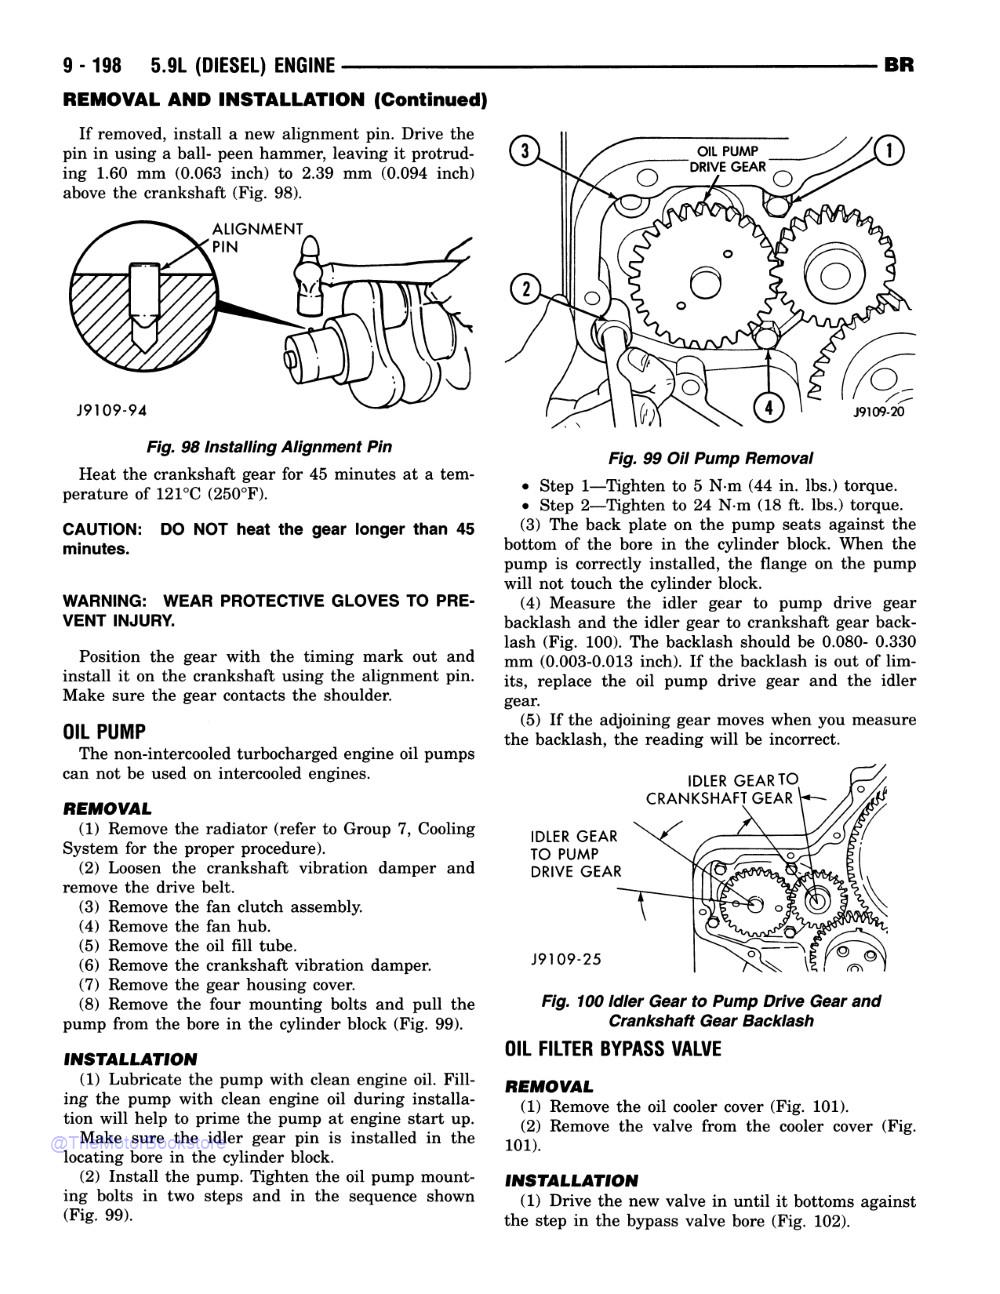 1996 Dodge Ram 1500-3500 Truck Shop Manual - Sample Page 3